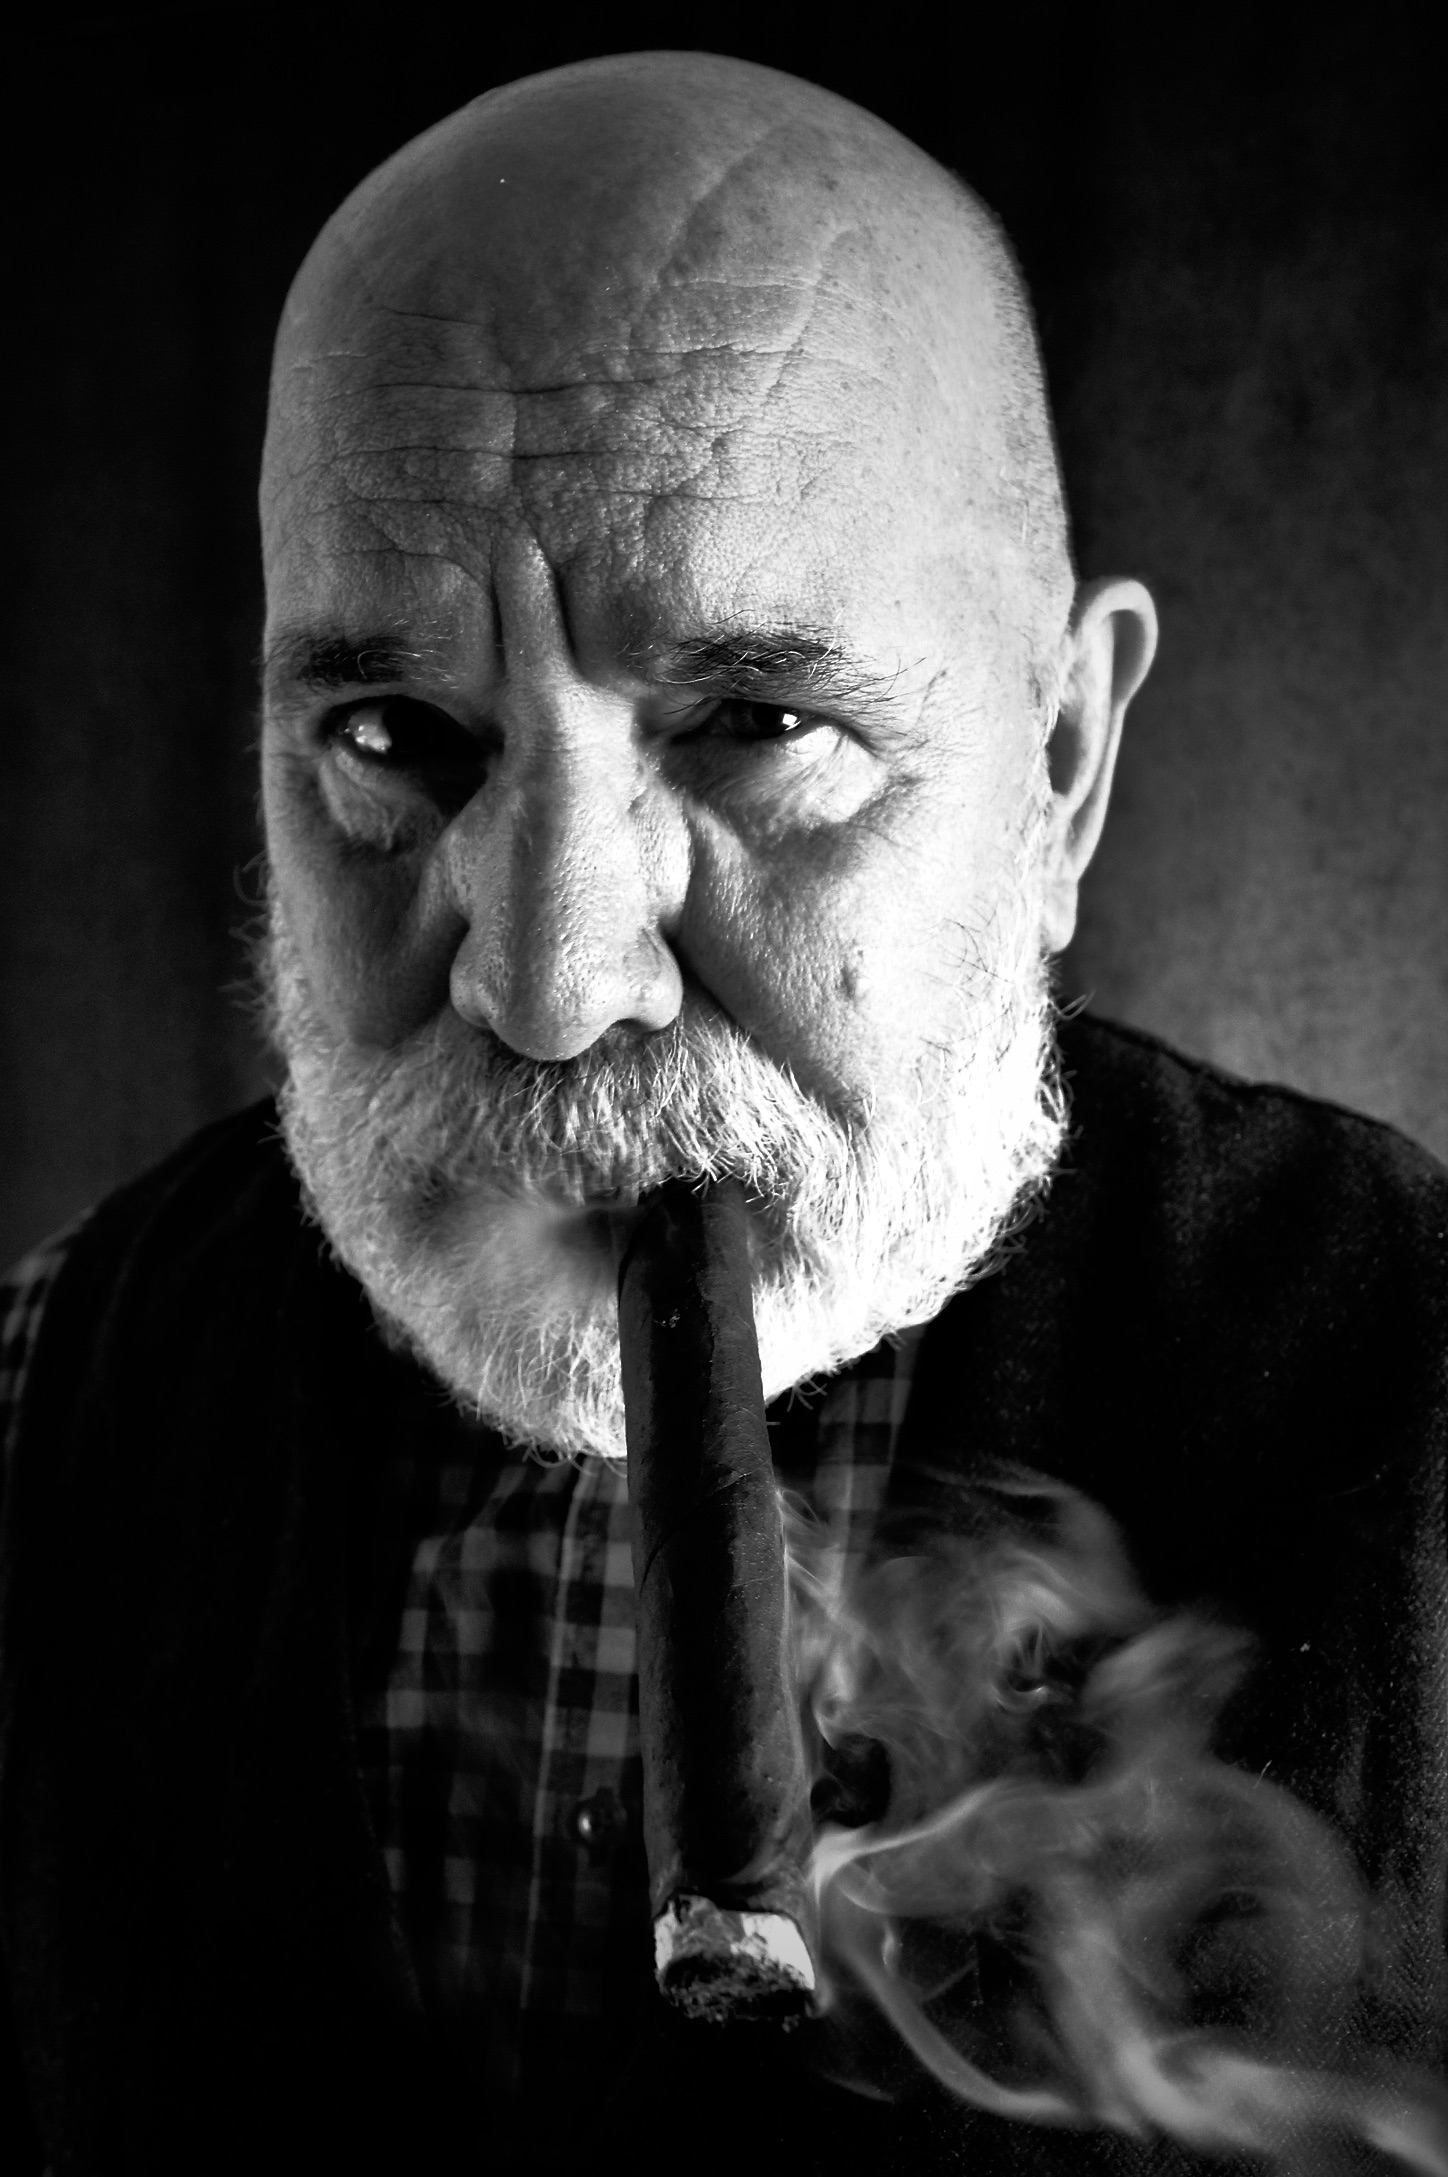 A B&W portrait of E.W. Doc Parris chomping on a cigar.